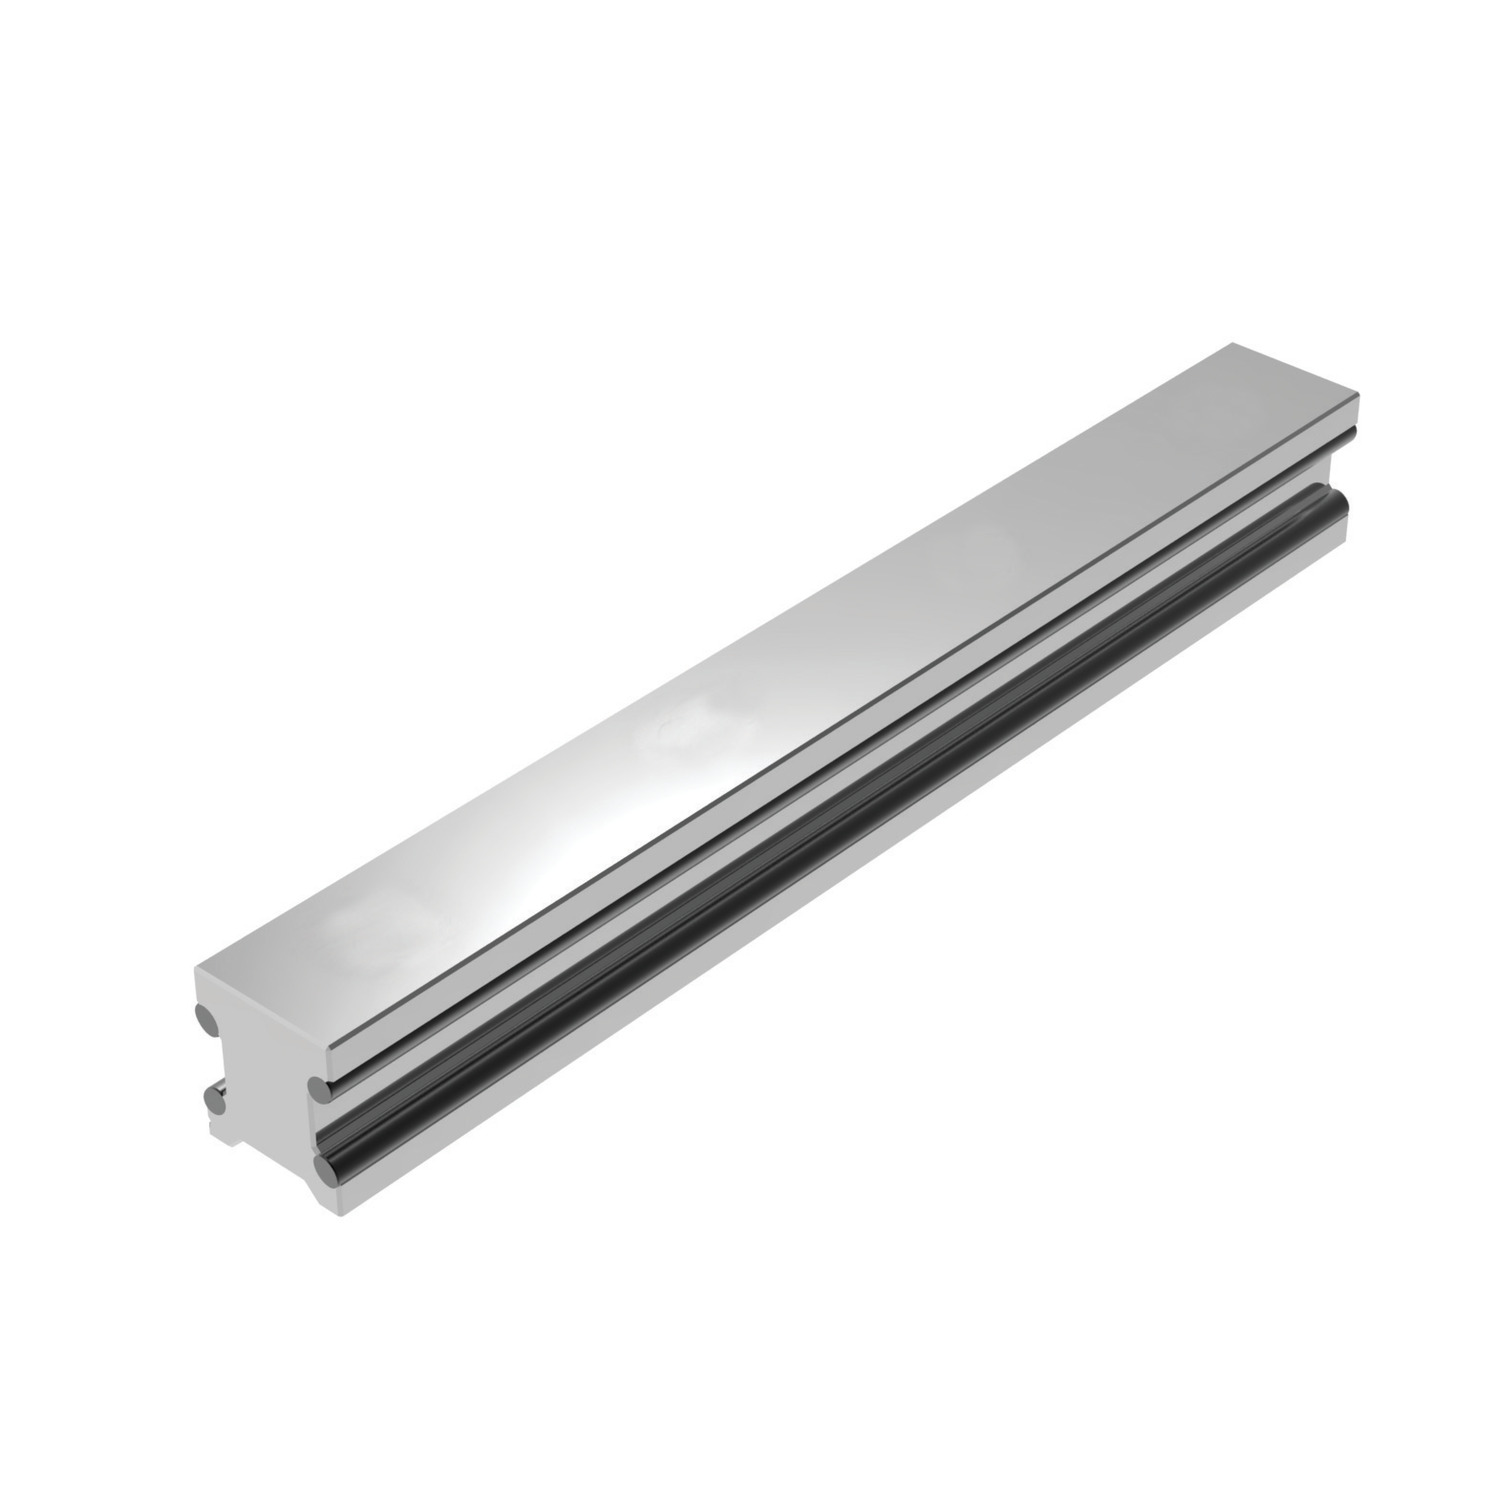 L1018.15 - 15mm Aluminium Linear Guide Rail